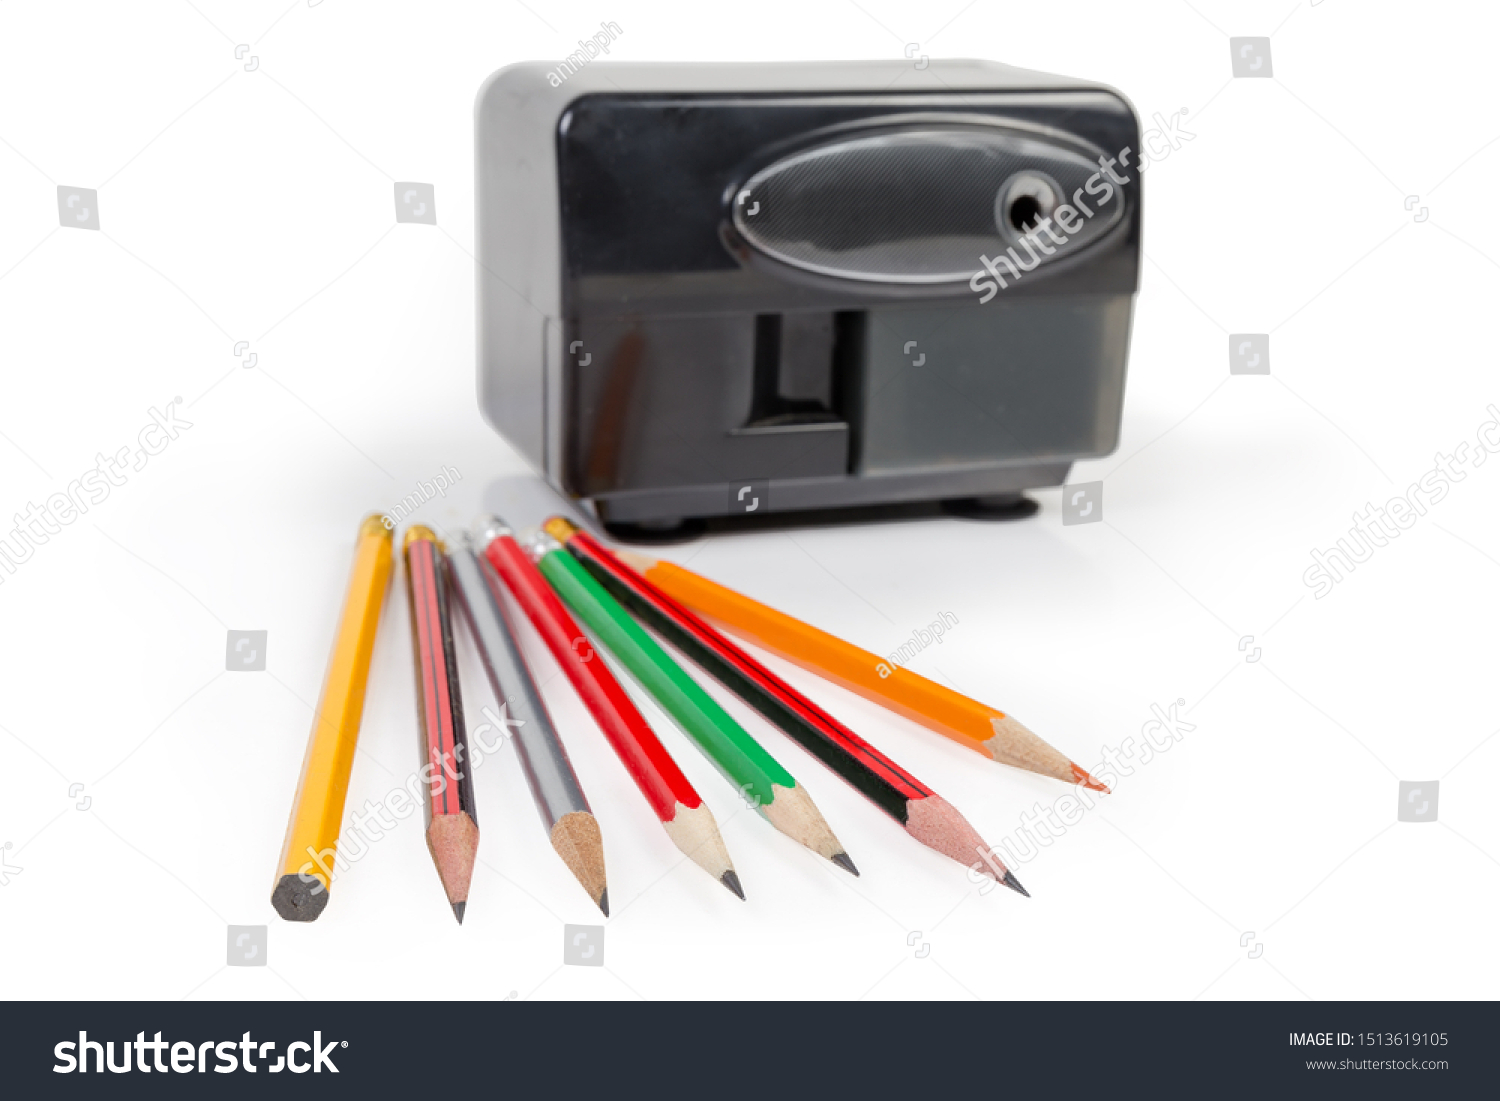 electric pencil and crayon sharpener